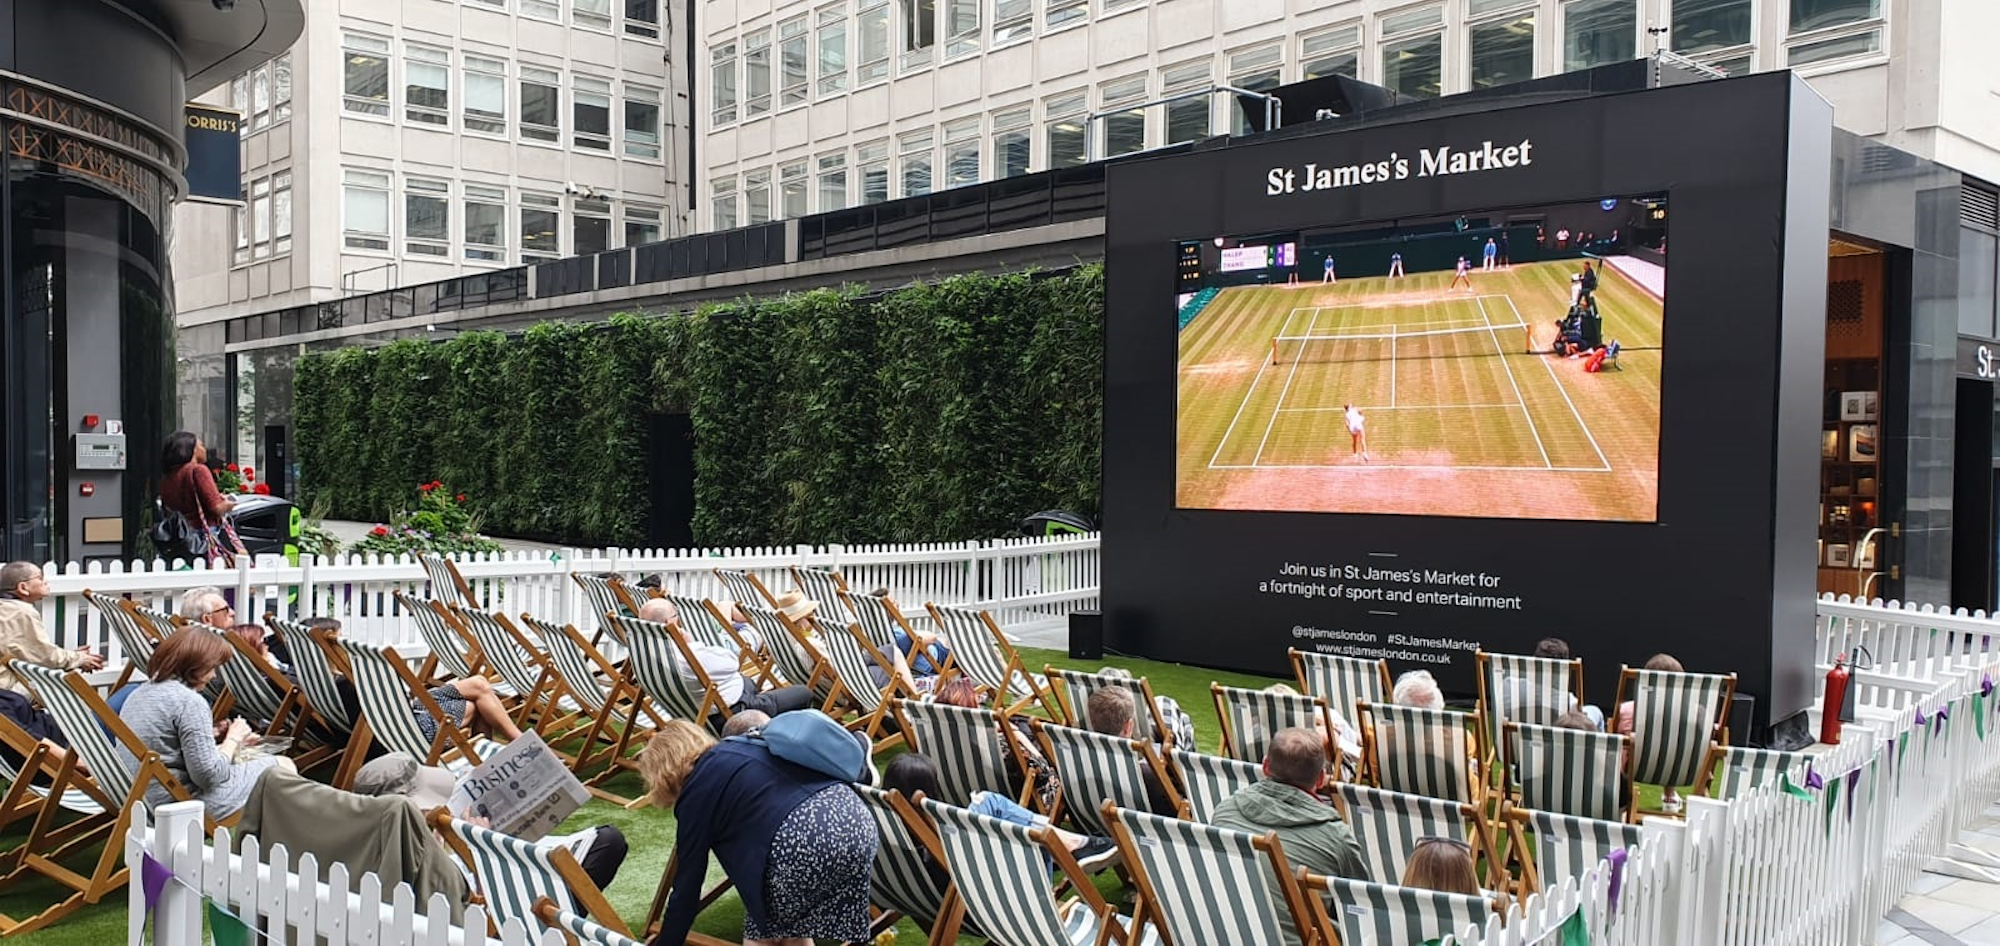 Living Wall As A Backdrop To Wimbledon Tennis Tournament at St James's Market London